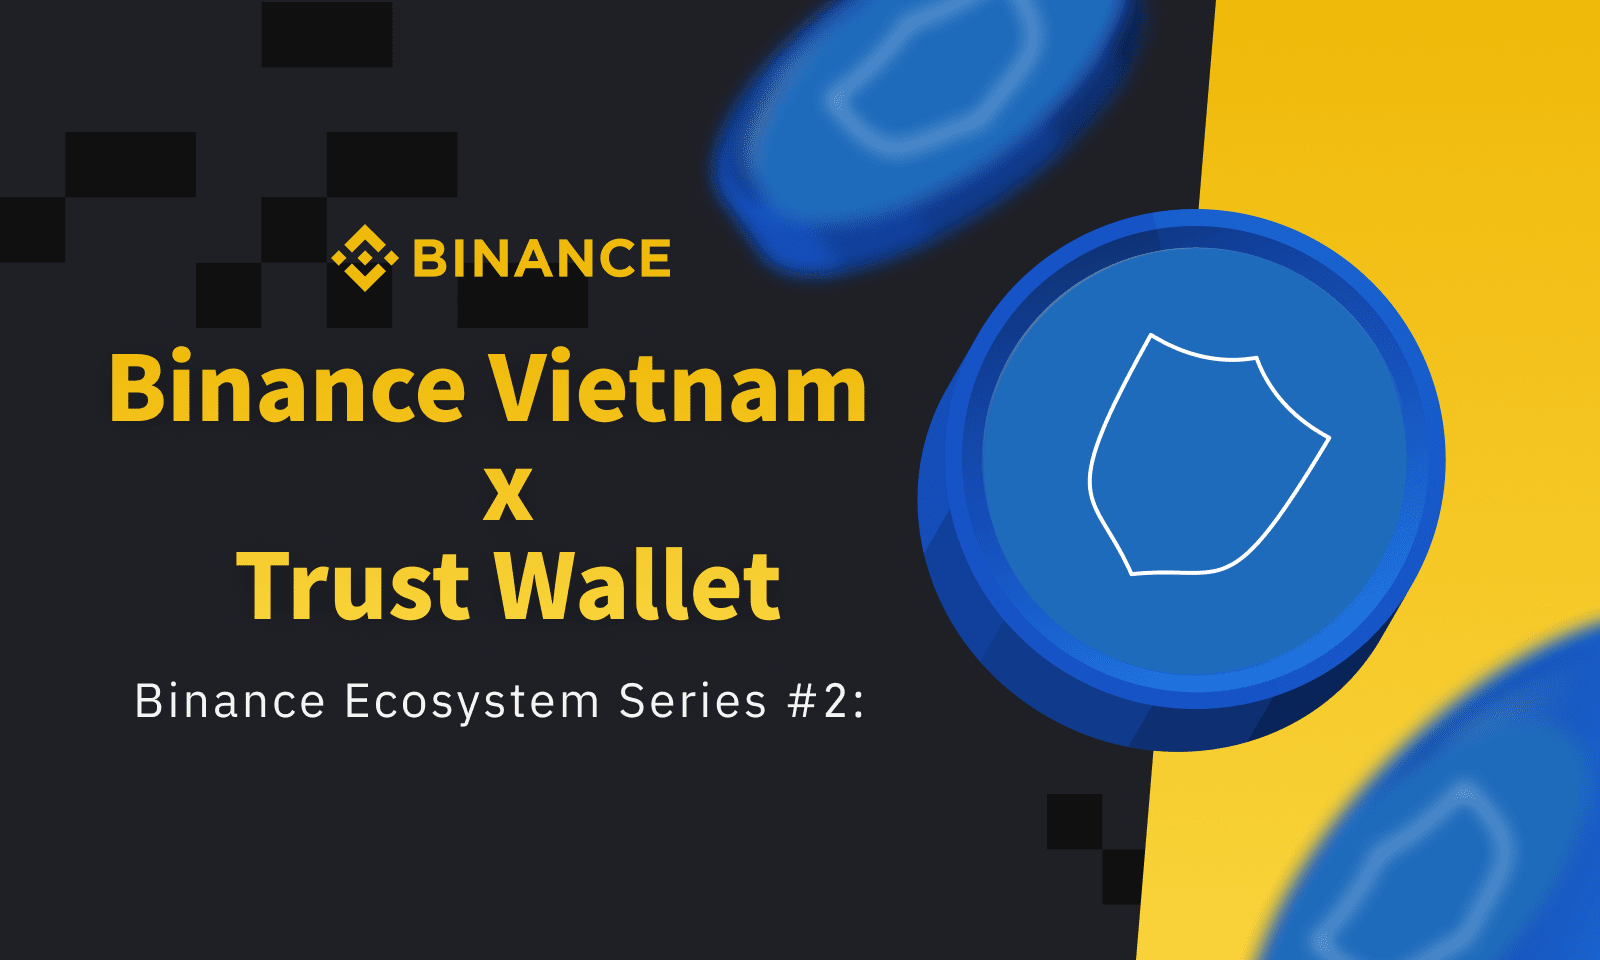 Binance Vietnam X Trust Wallet